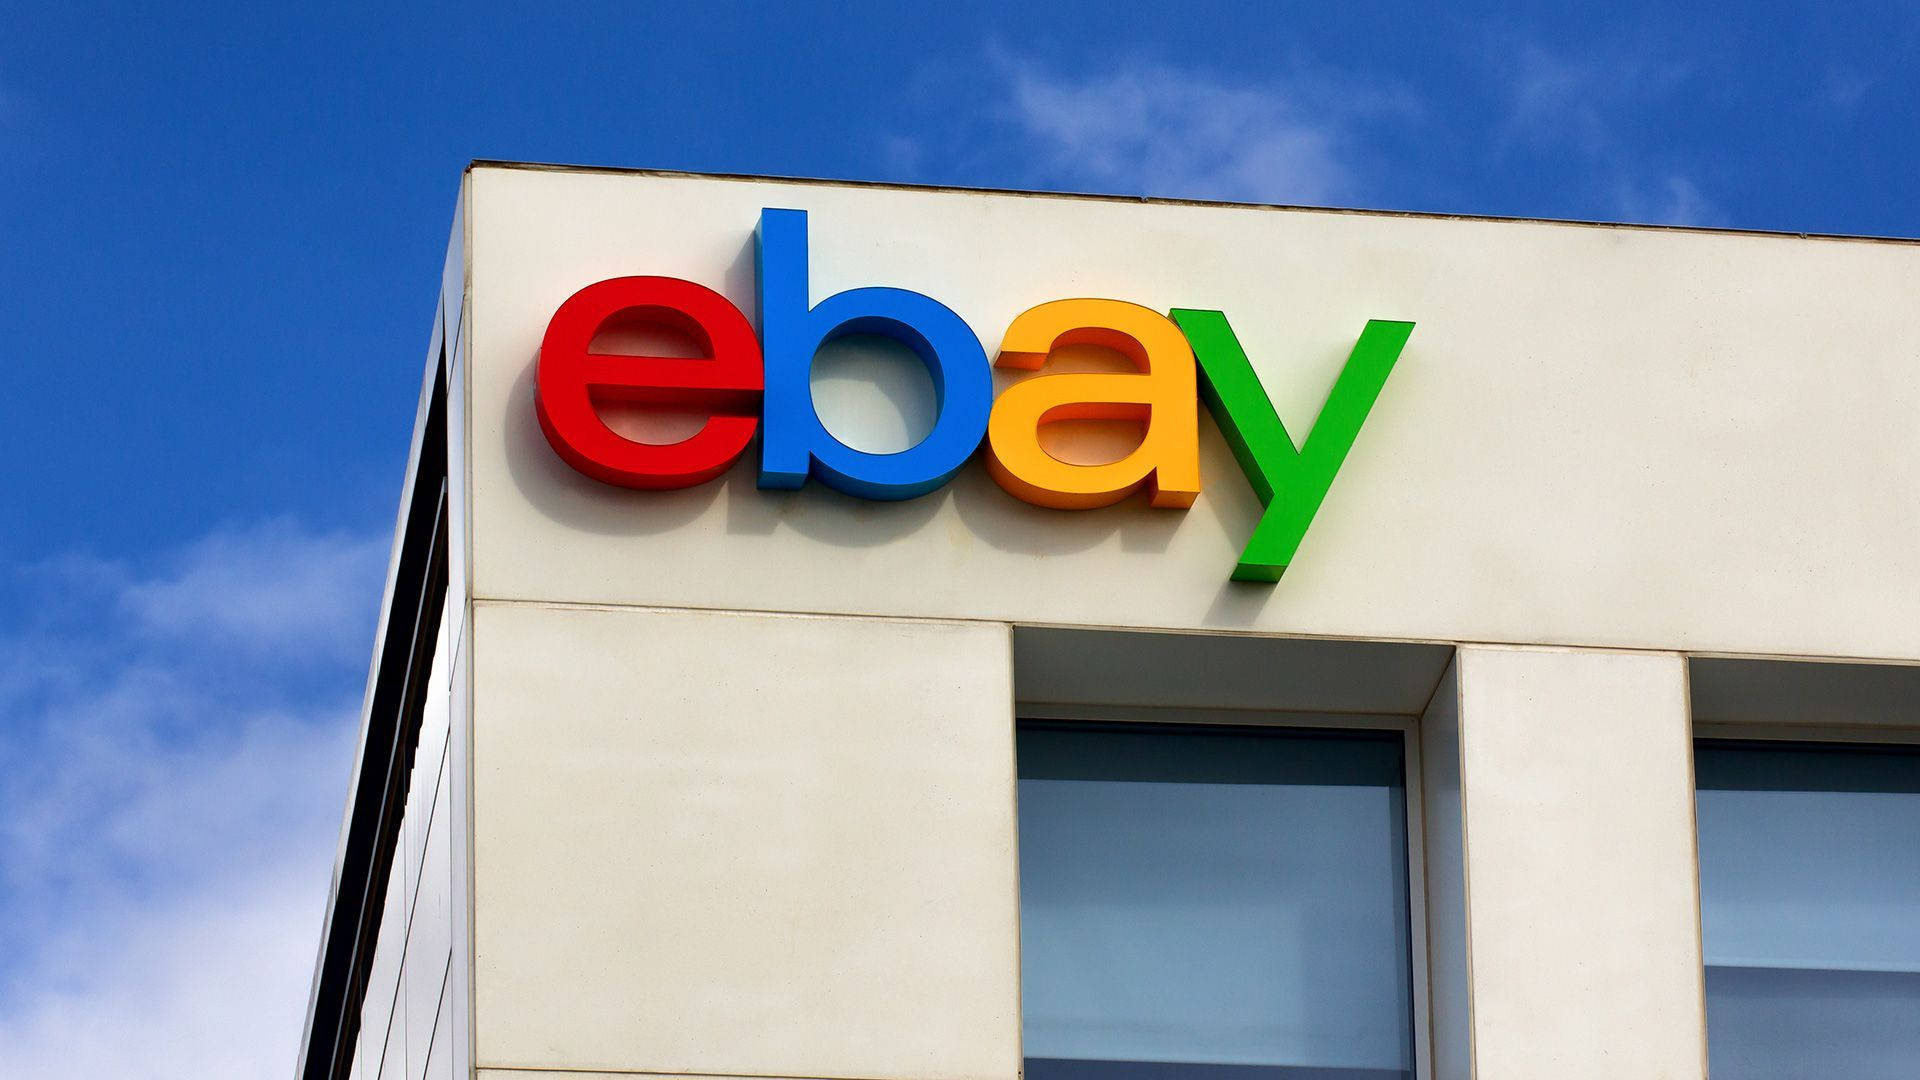 Ebay Symbol On Building Background